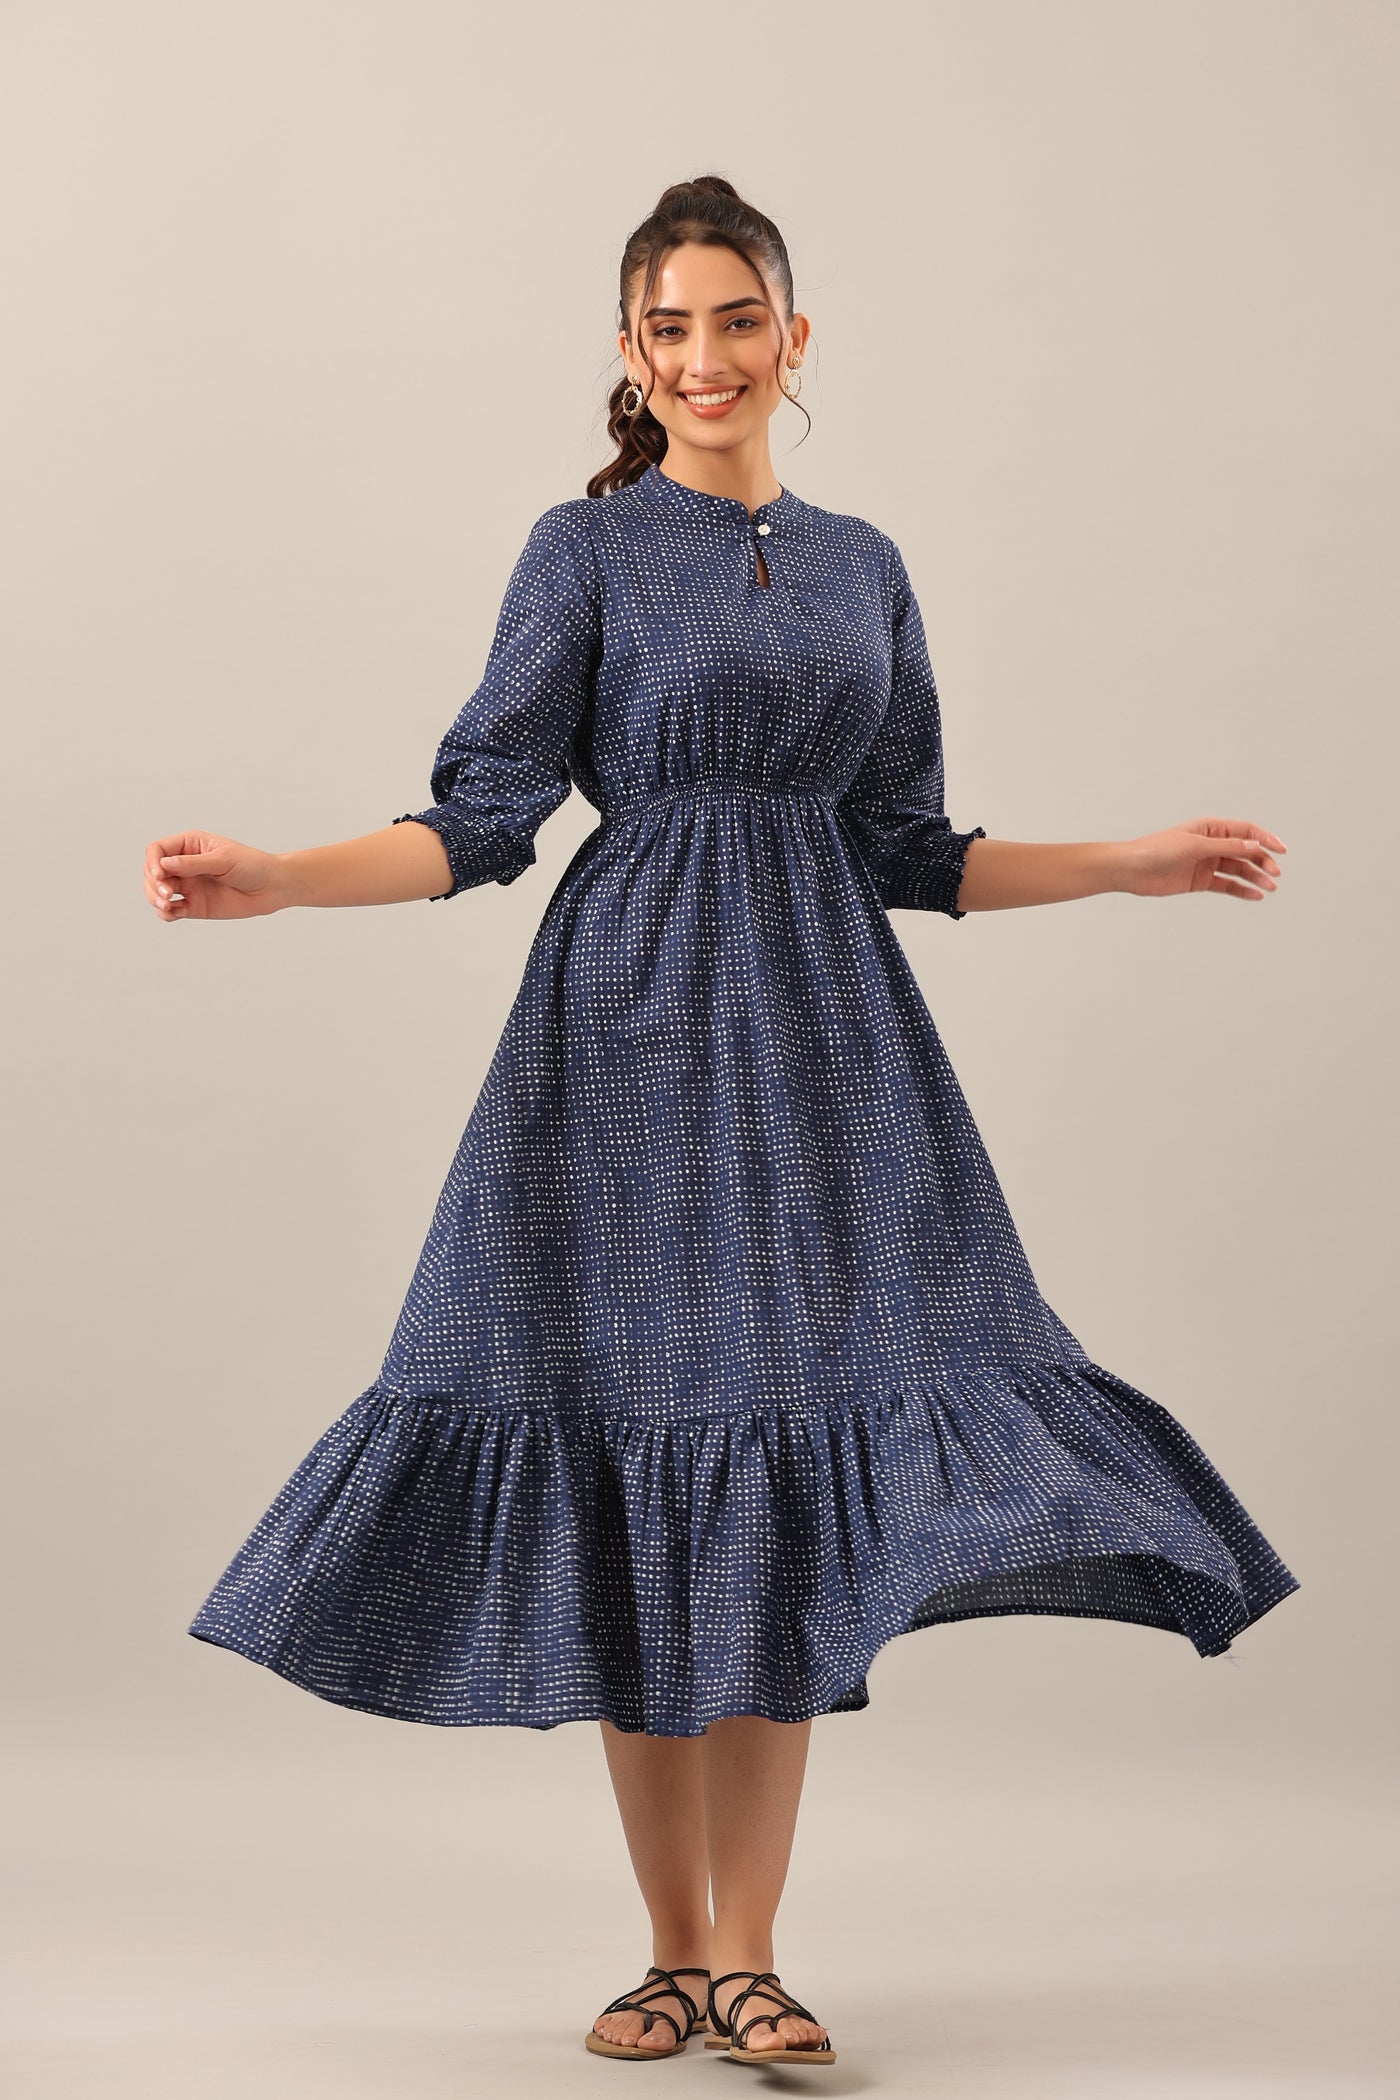 Dotted Polka on Blue cotton MIDI Dress